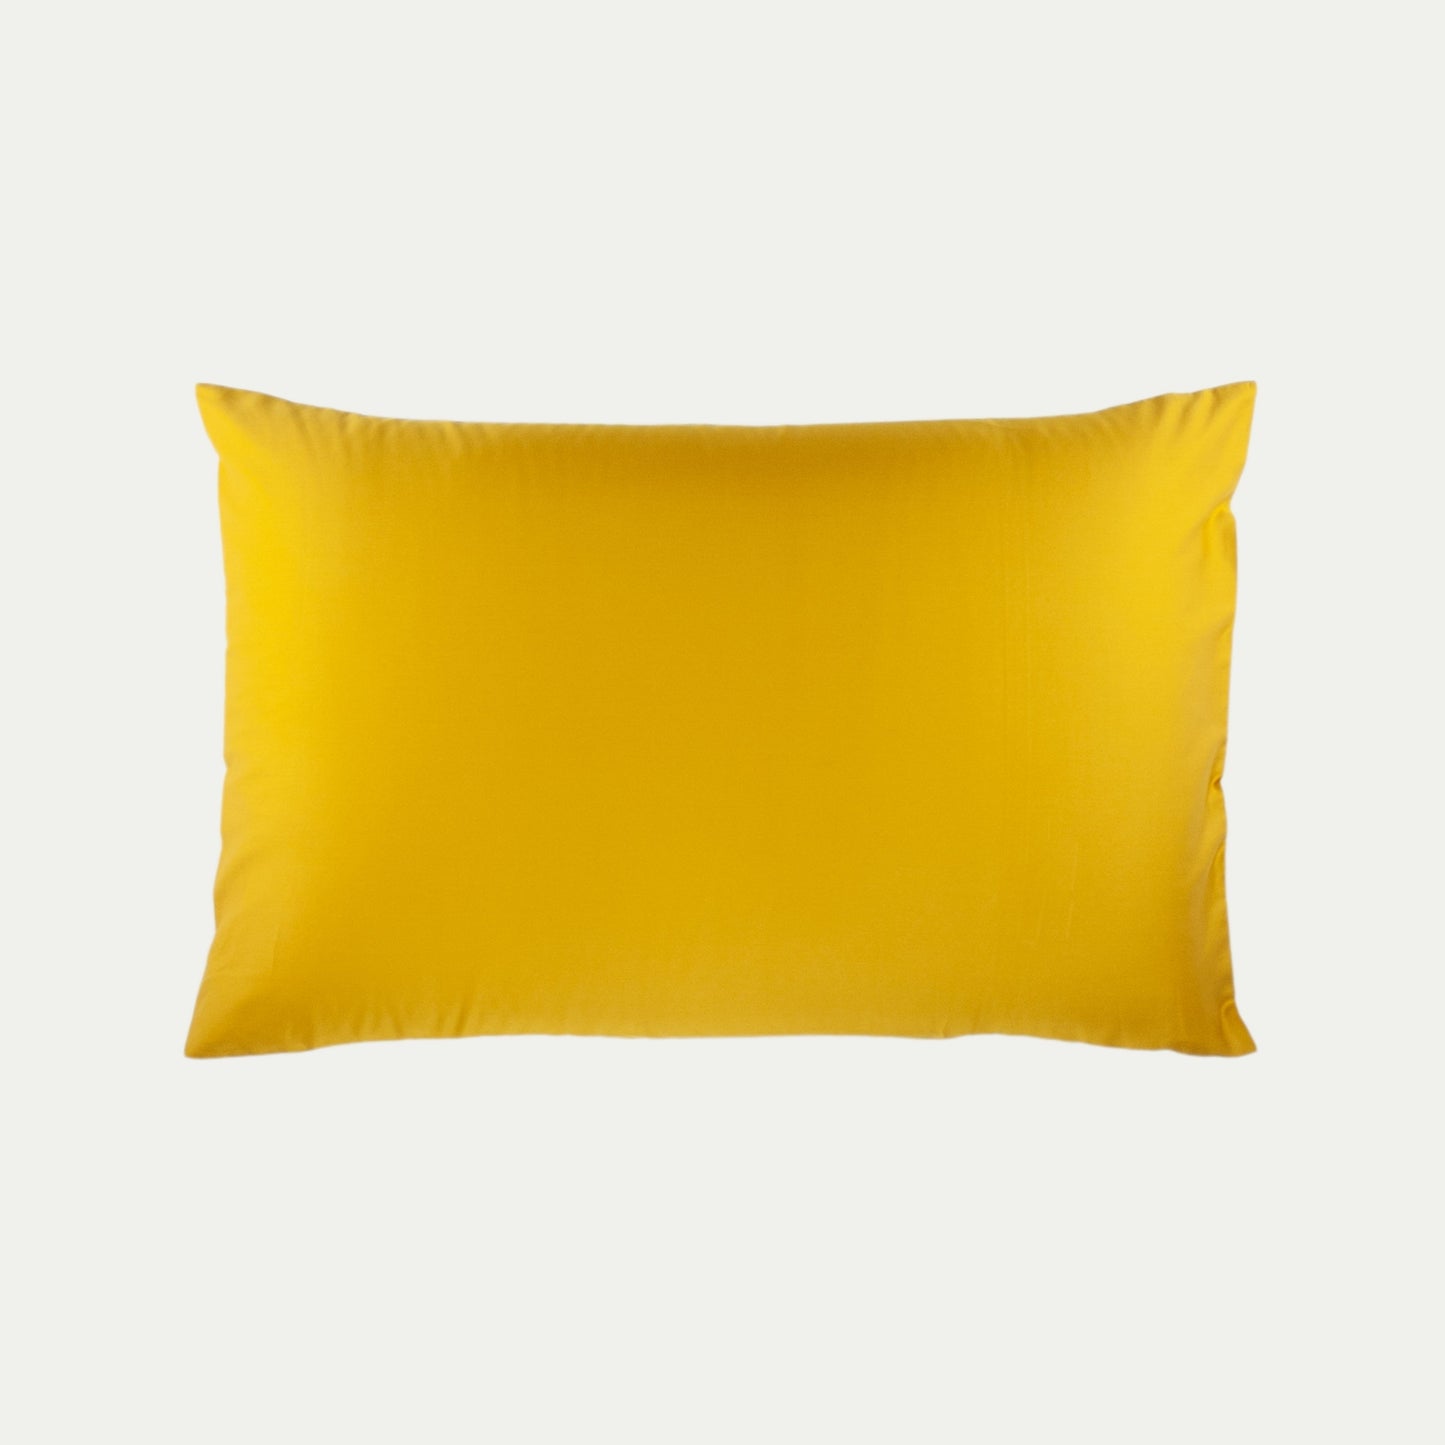 Organic cotton pillowcase in honey gold